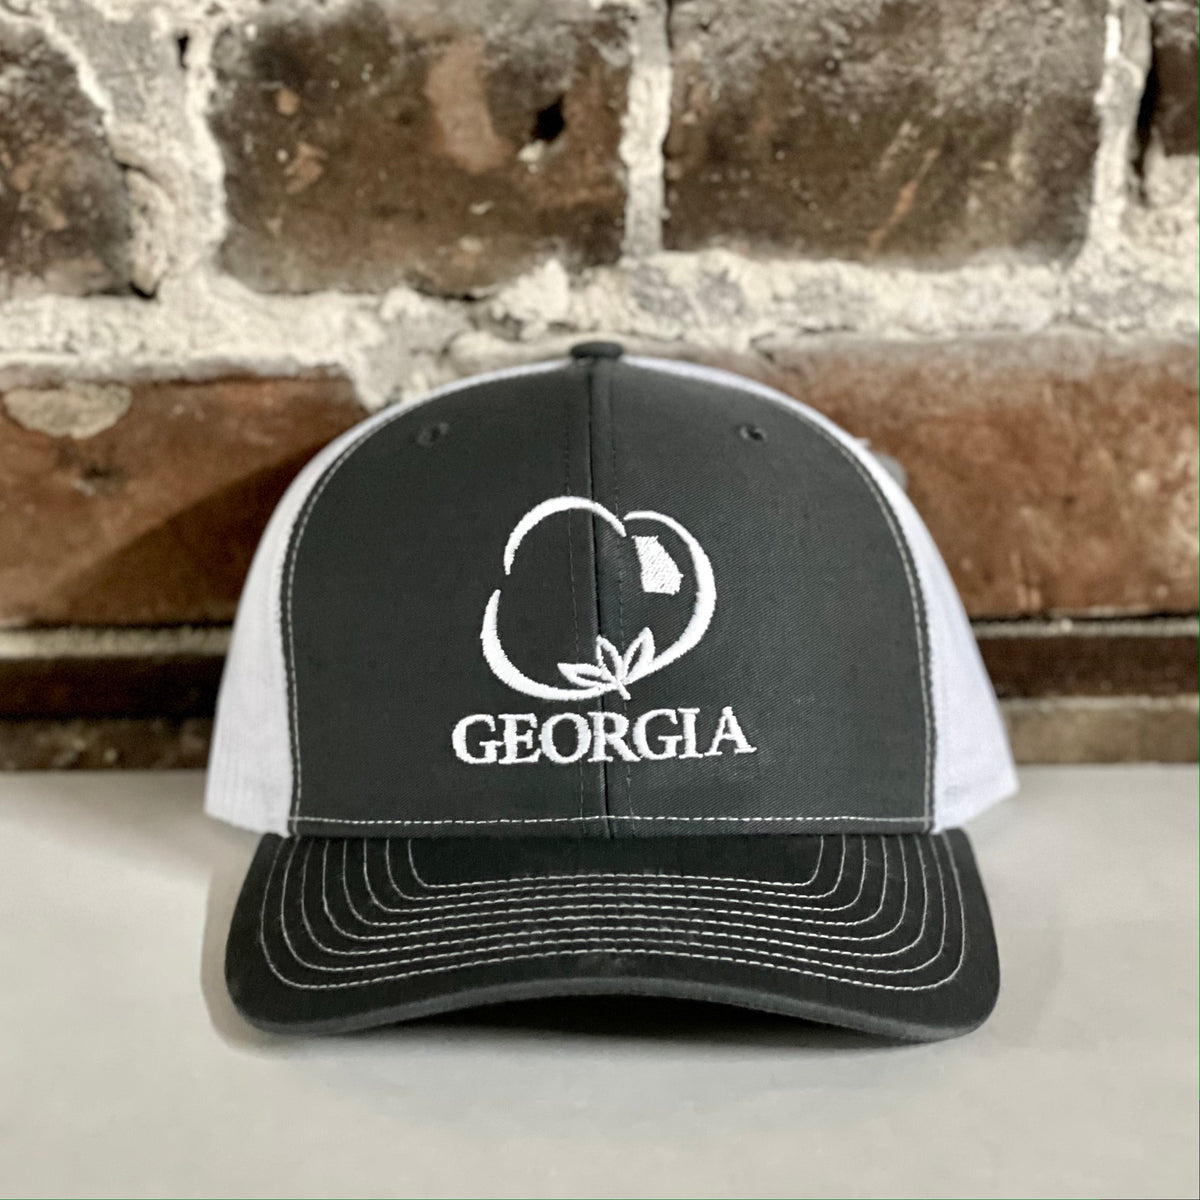 Heritage Pride Logo Georgia State Cotton Boll Southern Men's Trucker Hat  Black Black Mesh - Trenz Shirt Company